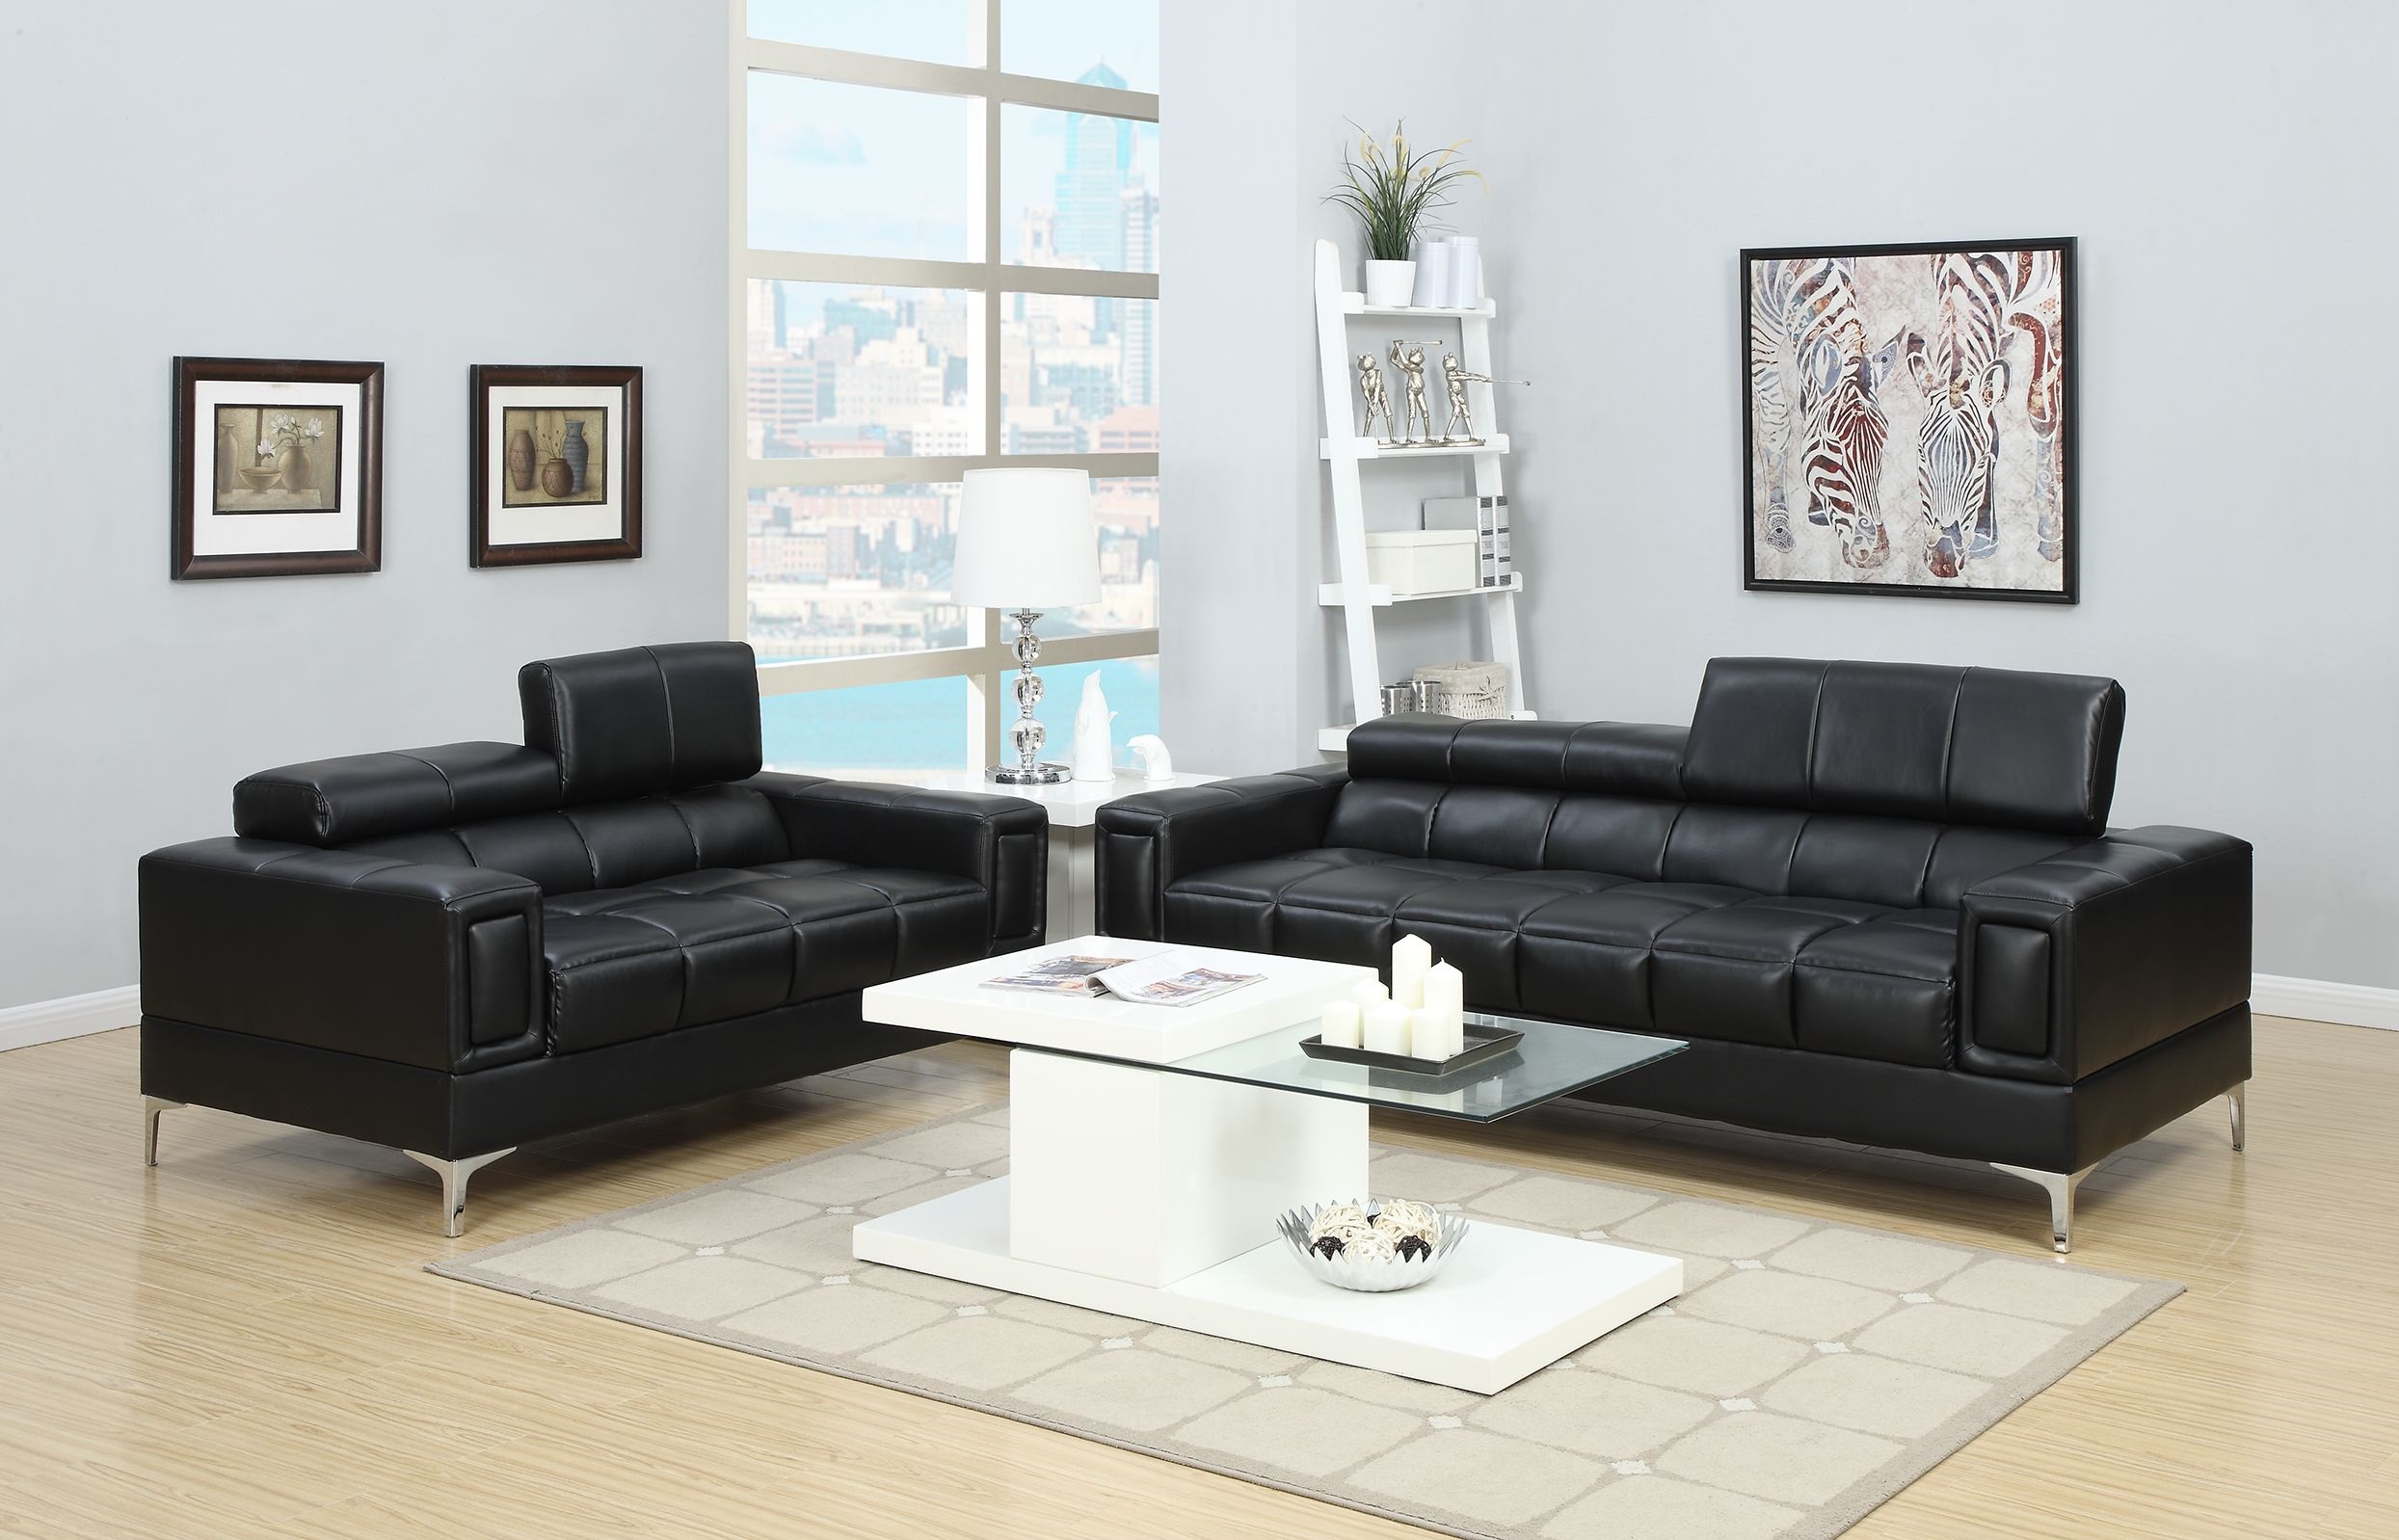 Black Faux Leather Living Room 2pc Sofa set Sofa And Loveseat Furniture Couch Unique Design Metal Legs Adjustable Headrest-Boyel Living